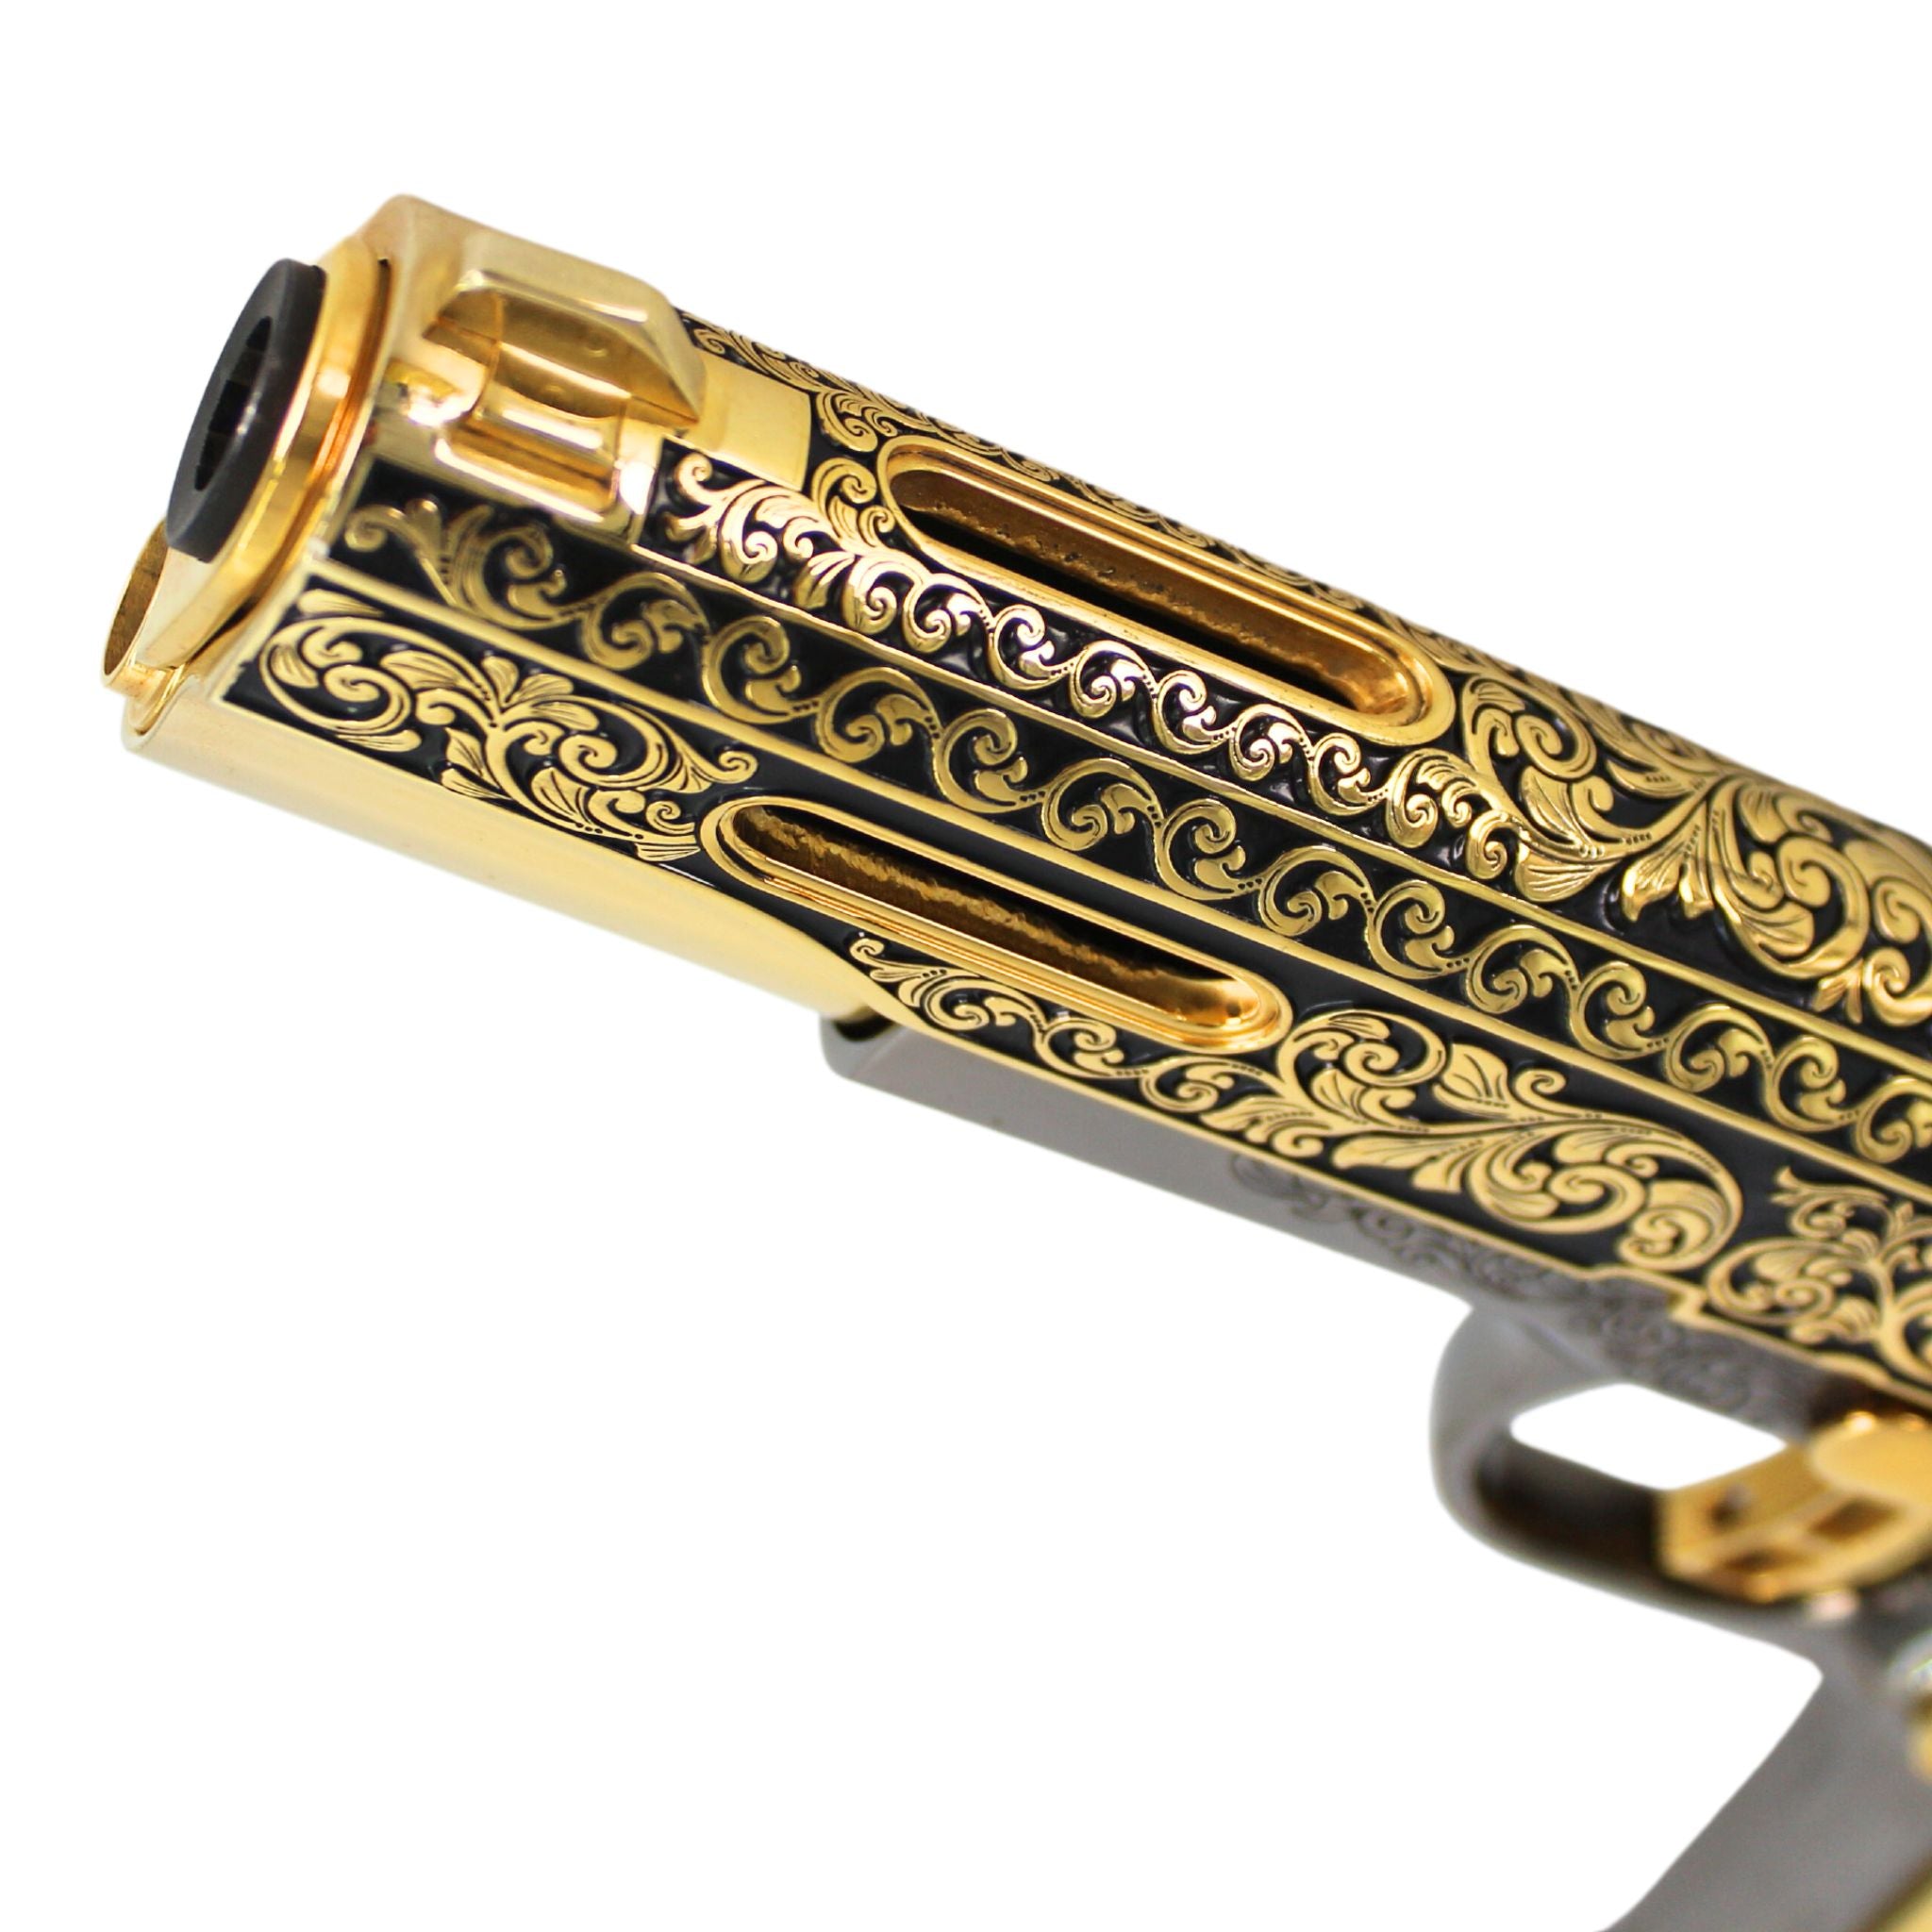 Rock Island 1911 Standard FS, 45 ACP, Classic Scroll engraved, 24 karat Gold and Black Chrome plated, SKU: 7010462728294,  Gold Gun,  Gold Firearm, Engraved Firearm 